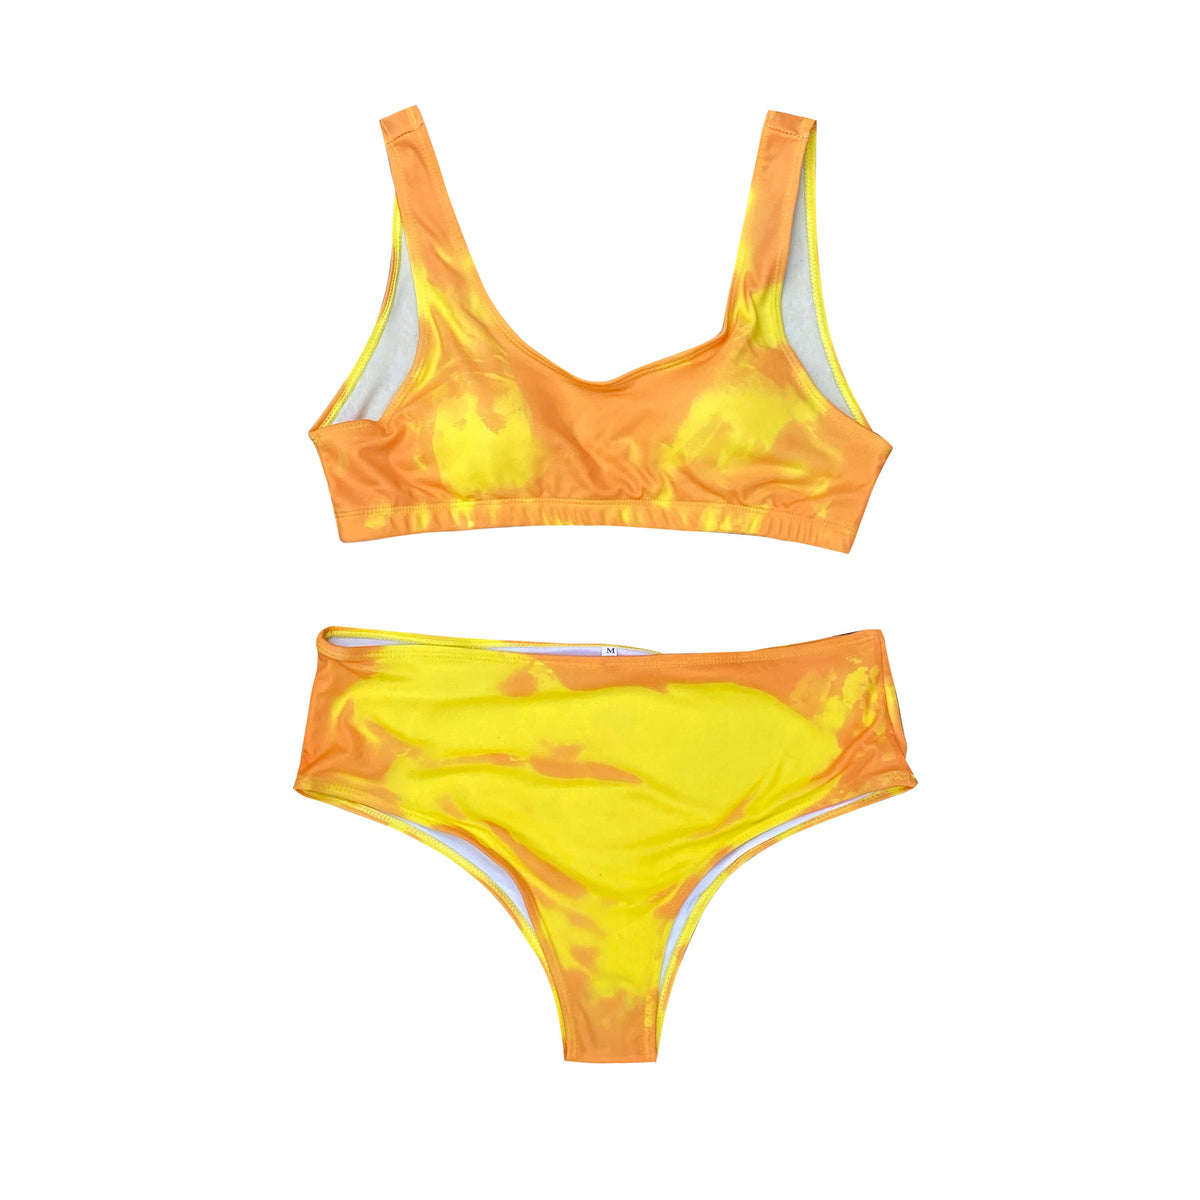 Islandhaze® color changing high waisted bikini -Yellow to orange